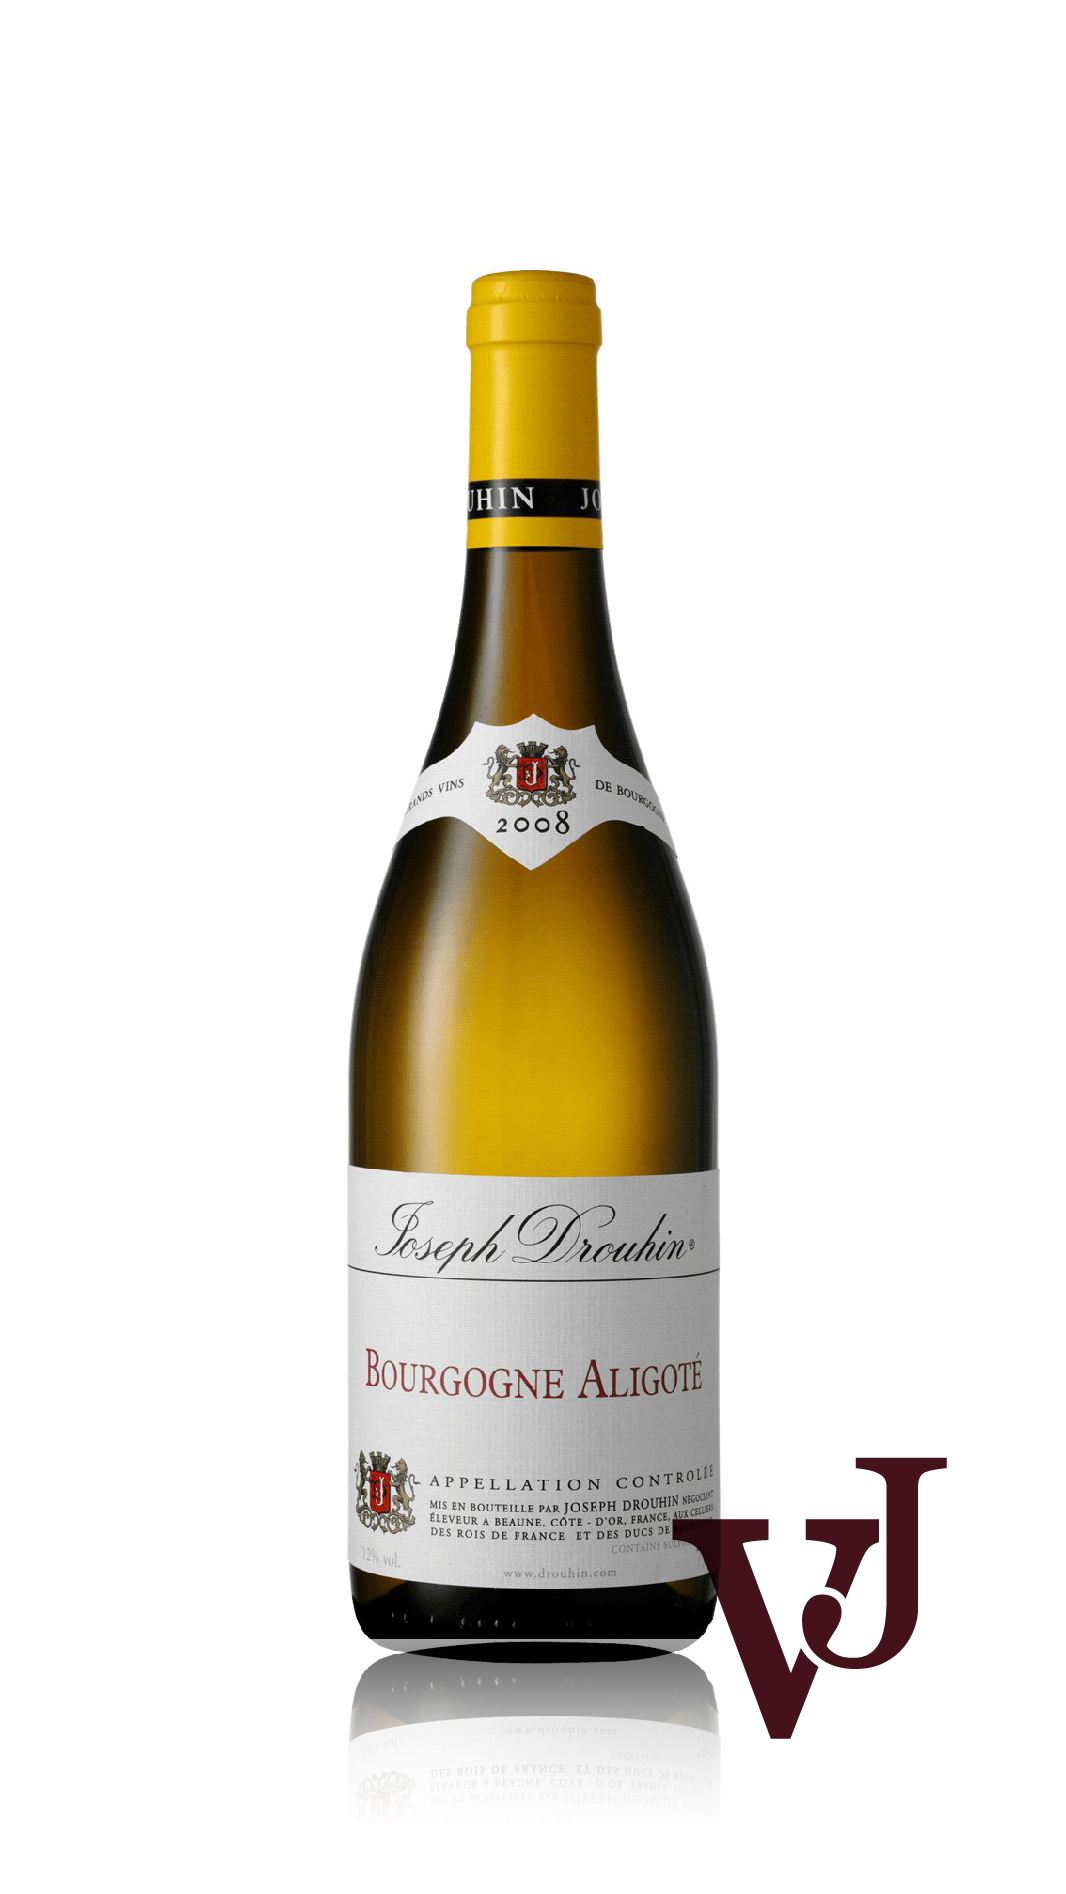 Vitt Vin - Bourgogne Aligoté Joseph Drouhin artikel nummer 550001 från producenten Joseph Drouhin från området Frankrike